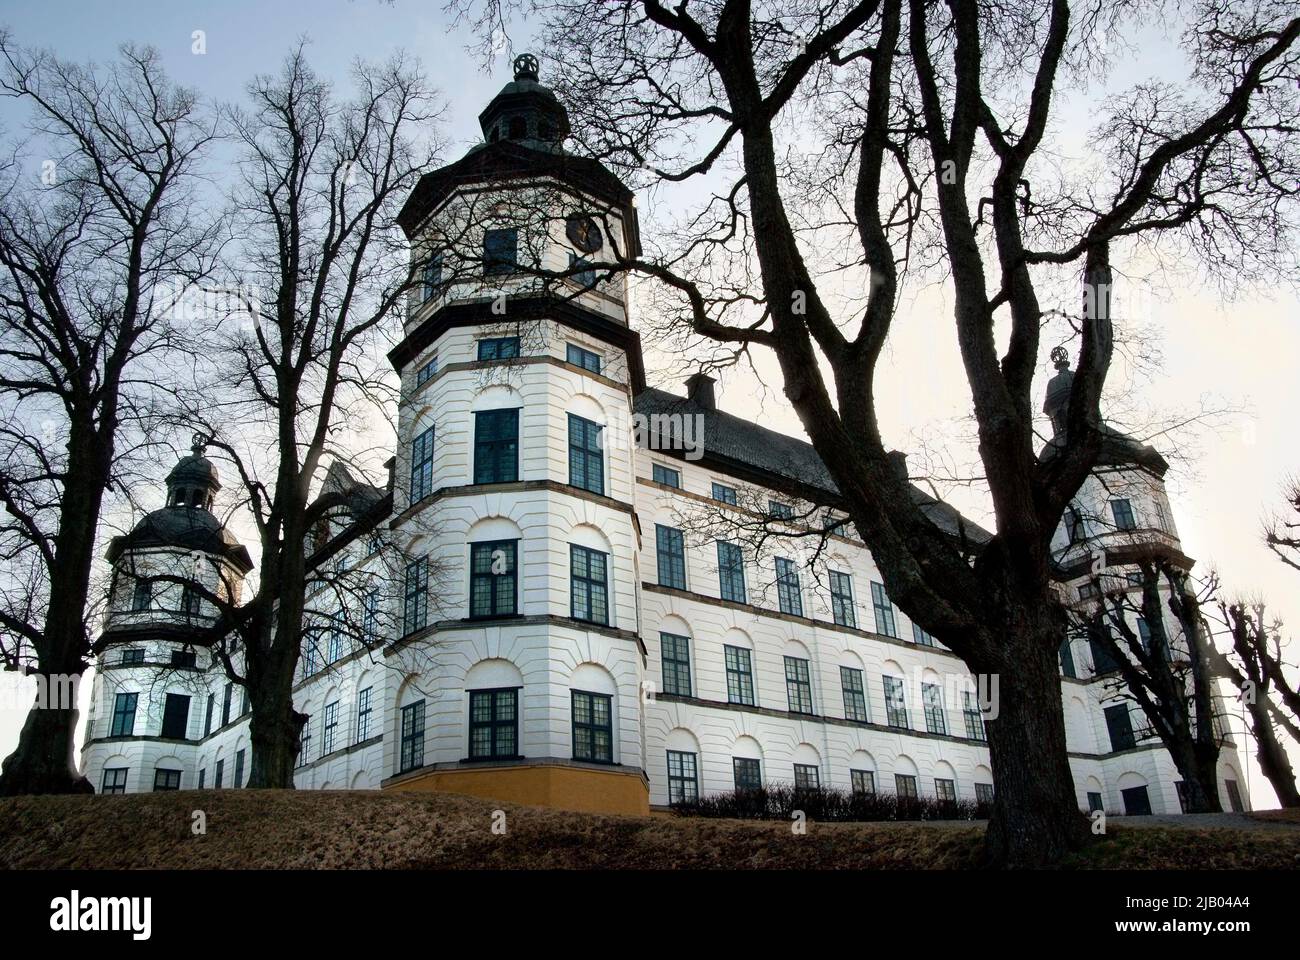 Skokloster 17th-century baroque castle, located in Uppland, Sweden. Stock Photo